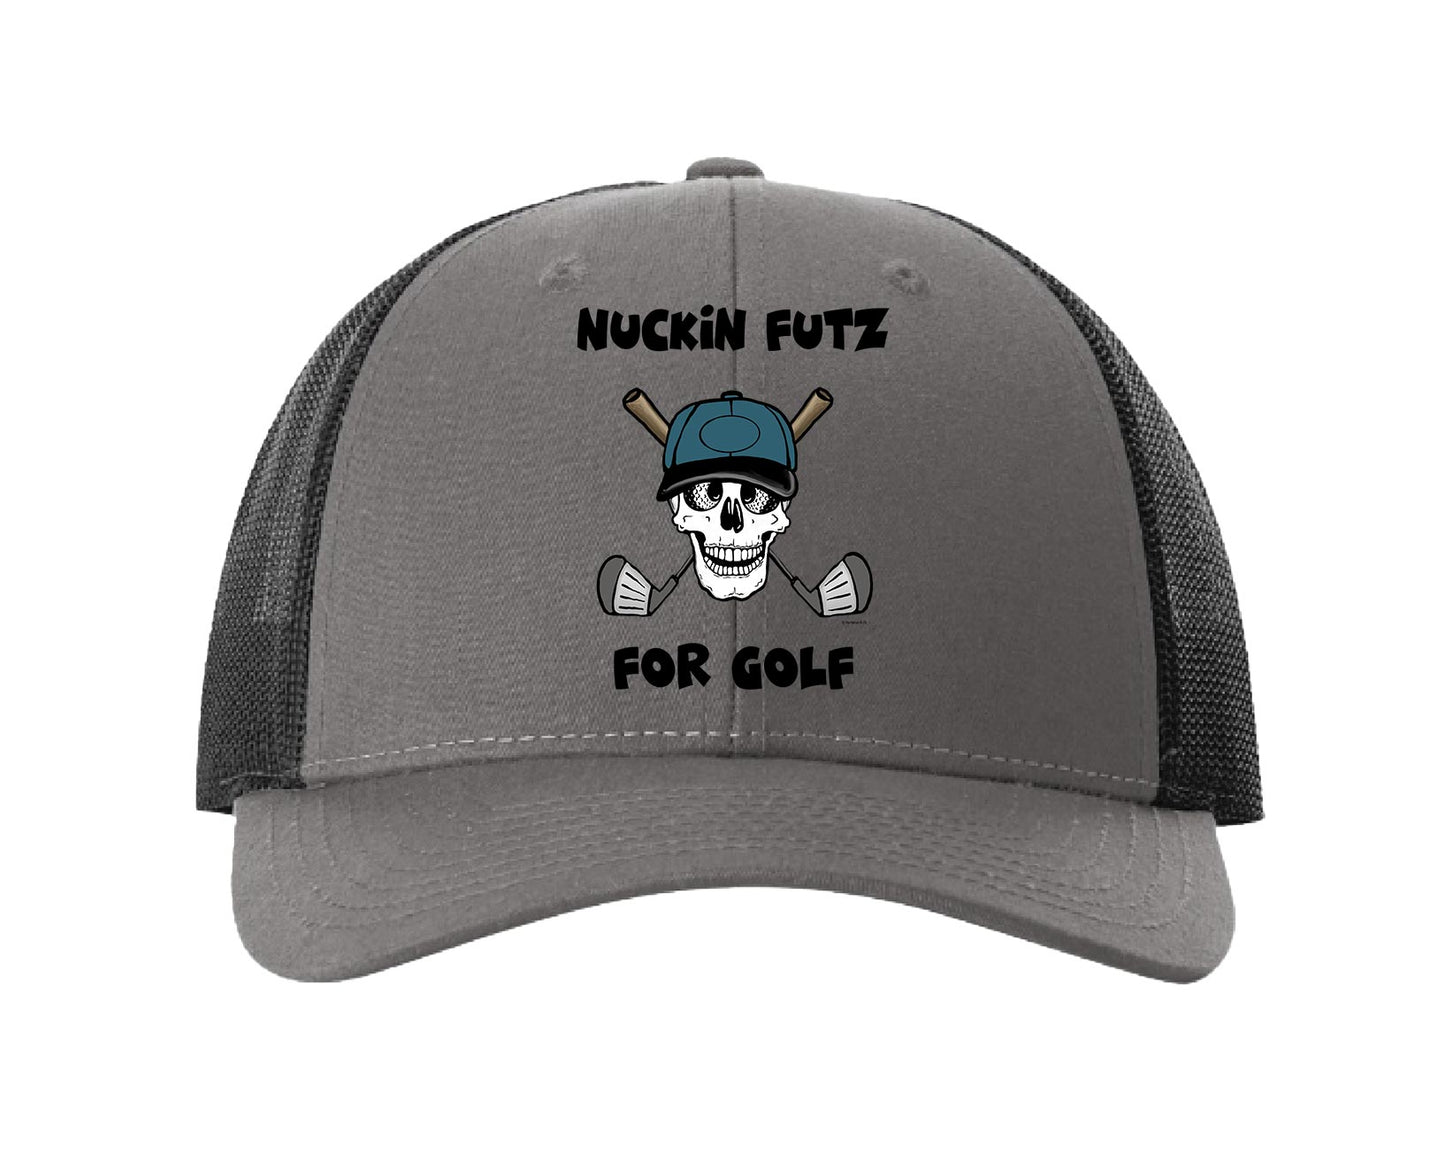 Nuckin Futz for Golf - Low Profile Trucker Hat